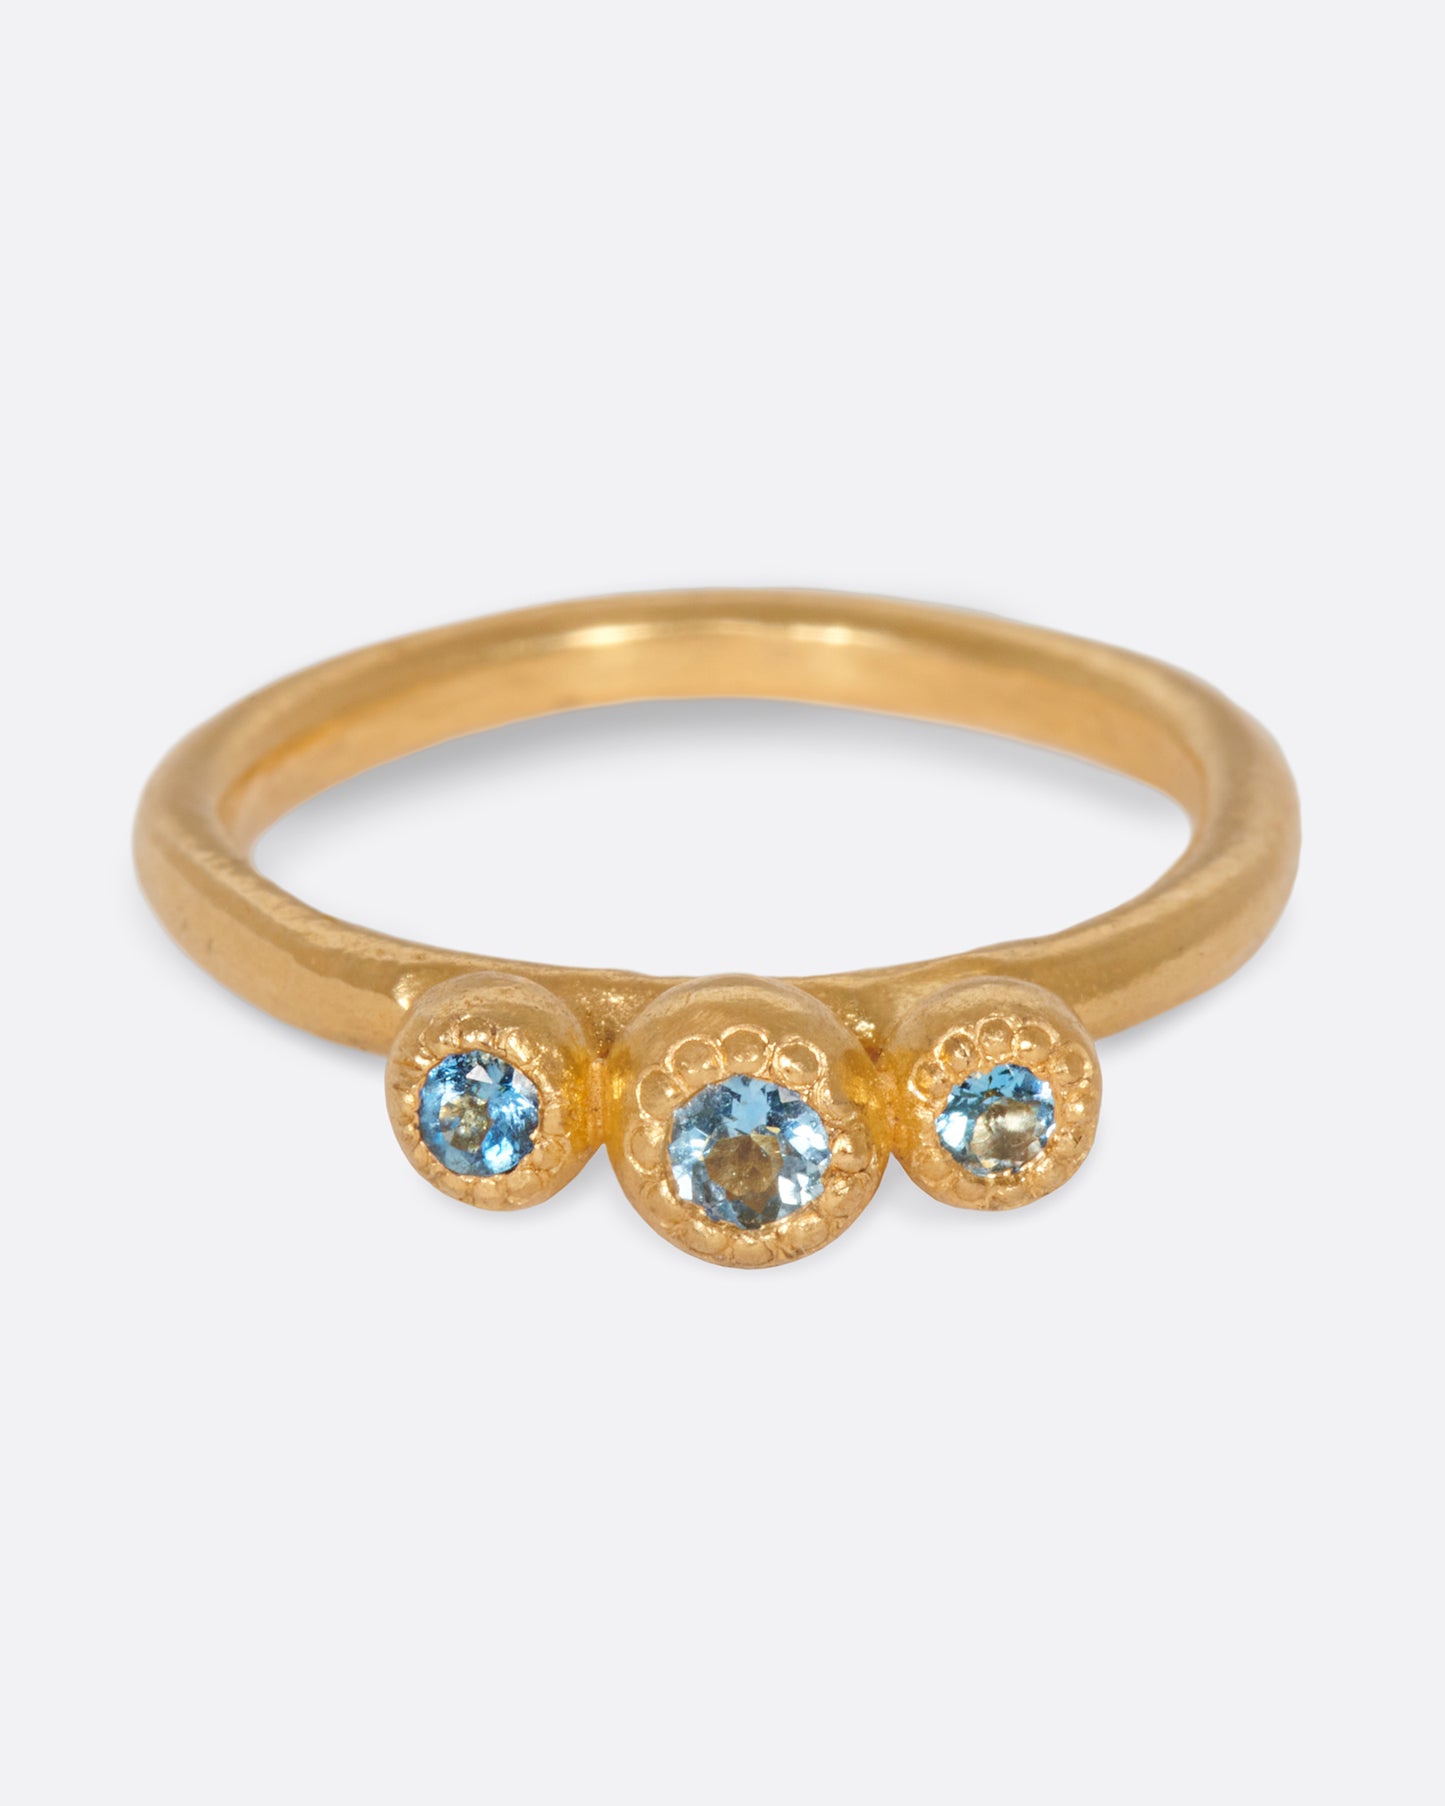 A handmade, high karat gold ring with three vibrant, bezel set aquamarines.